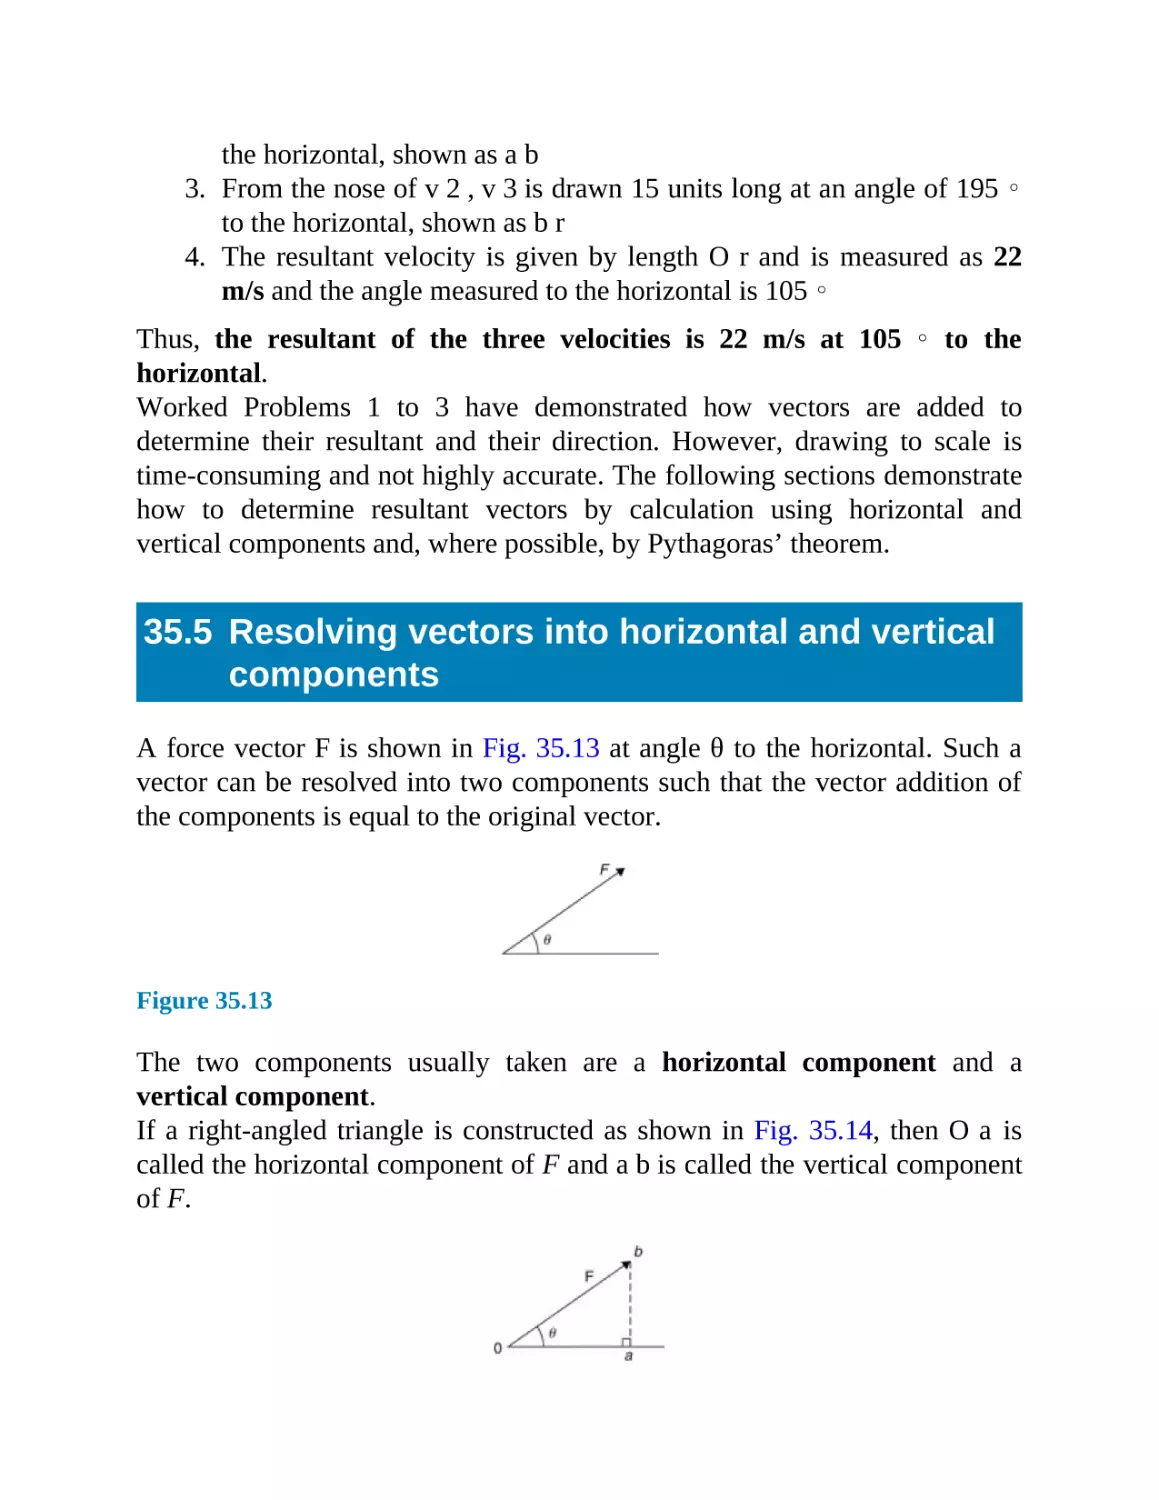 35.5 Resolving vectors into horizontal and vertical components